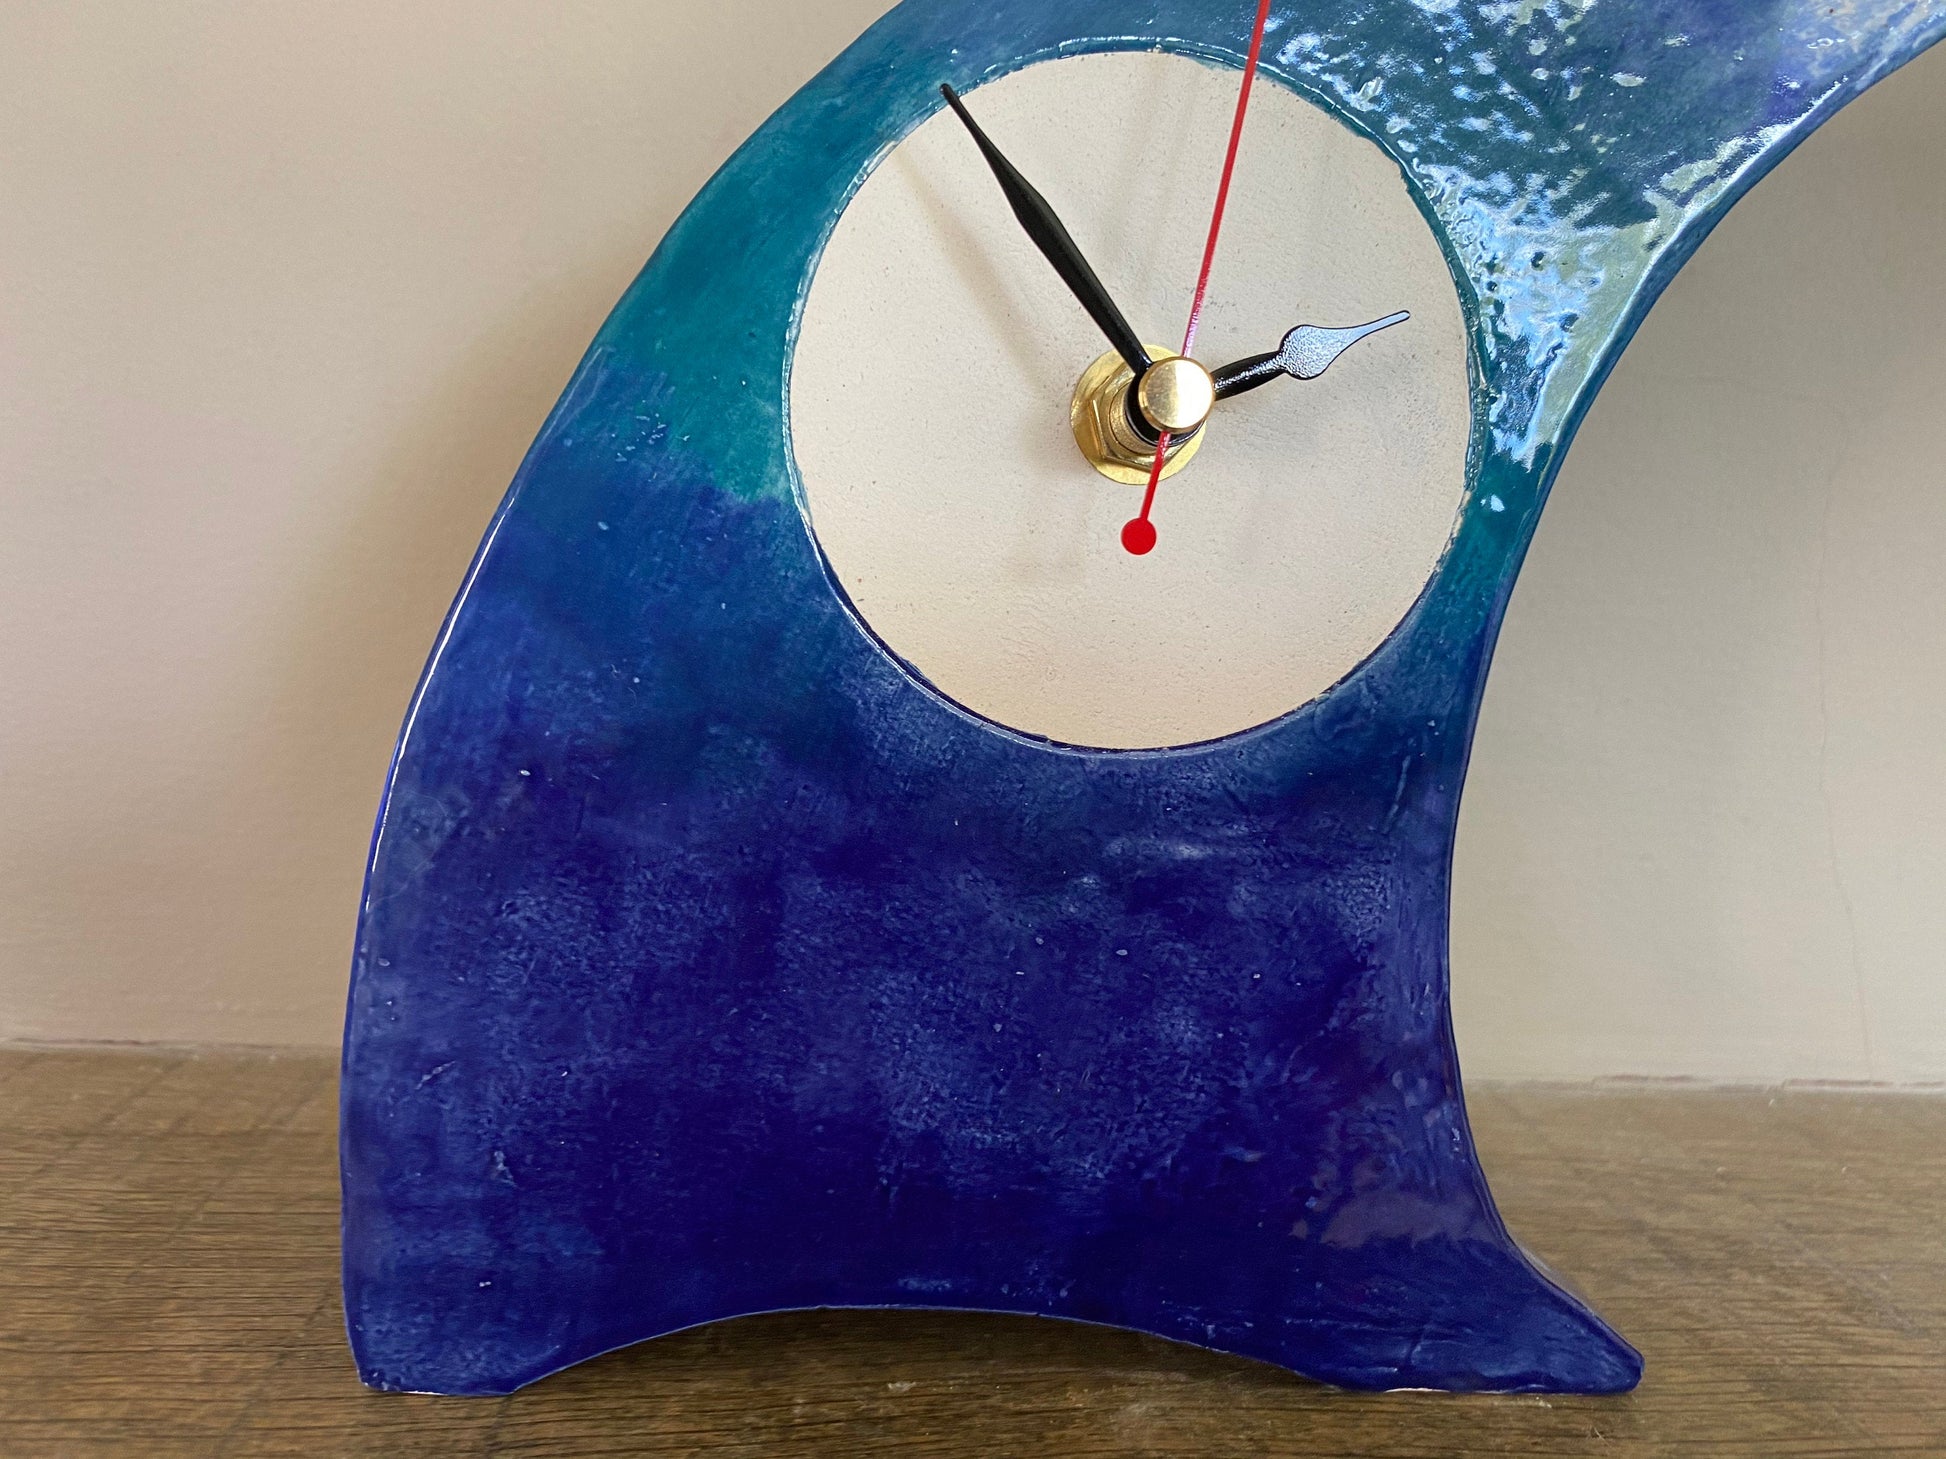 Tabletop Clock, Wave Handmade Ceramic Design